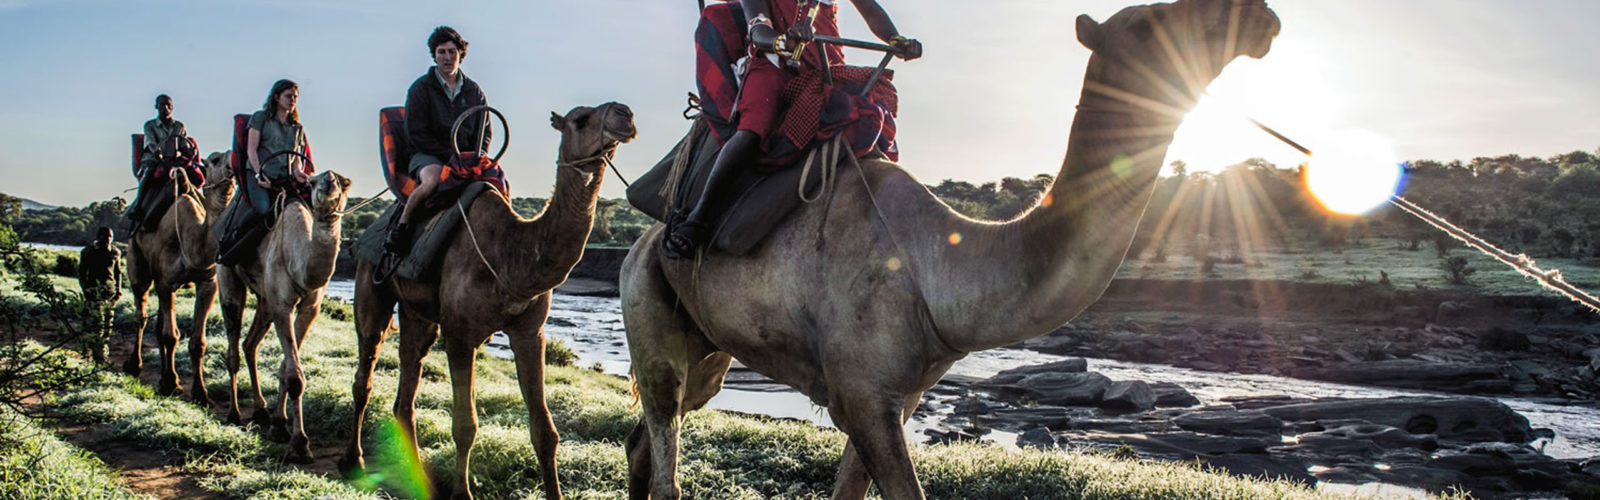 3days-samburu-kenya-camel-safariandadventure